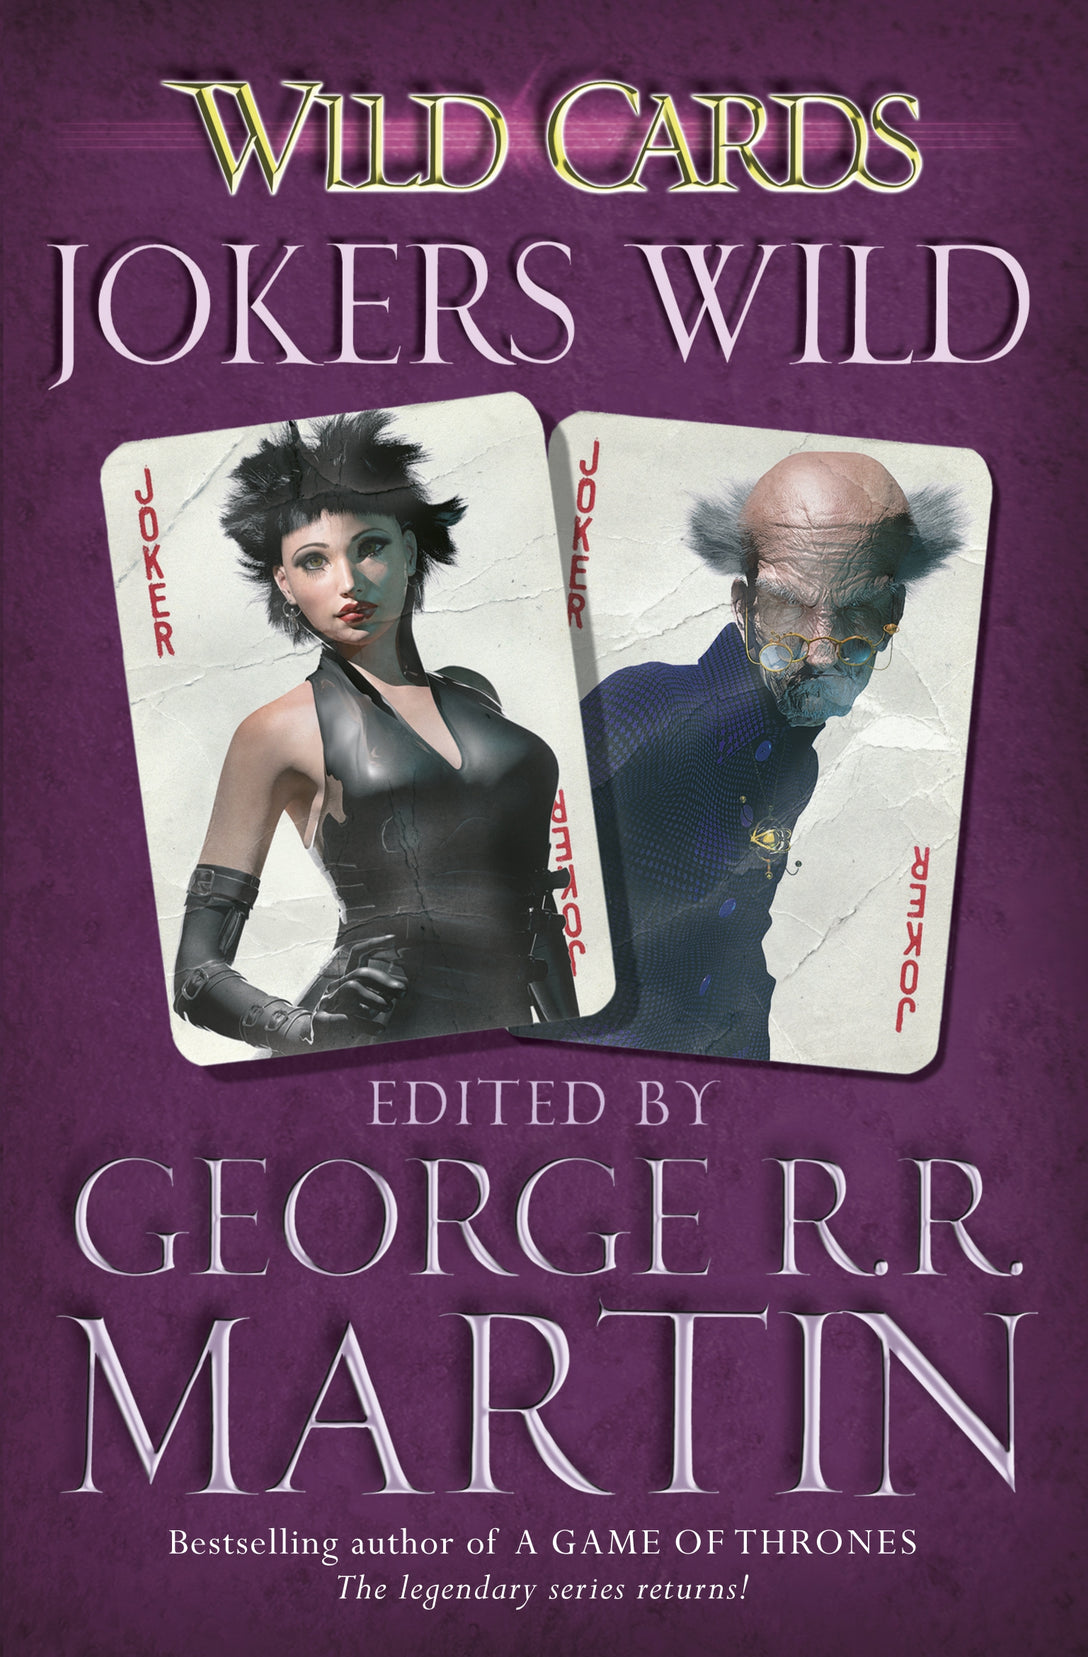 Wild Cards: Jokers Wild by George R.R. Martin